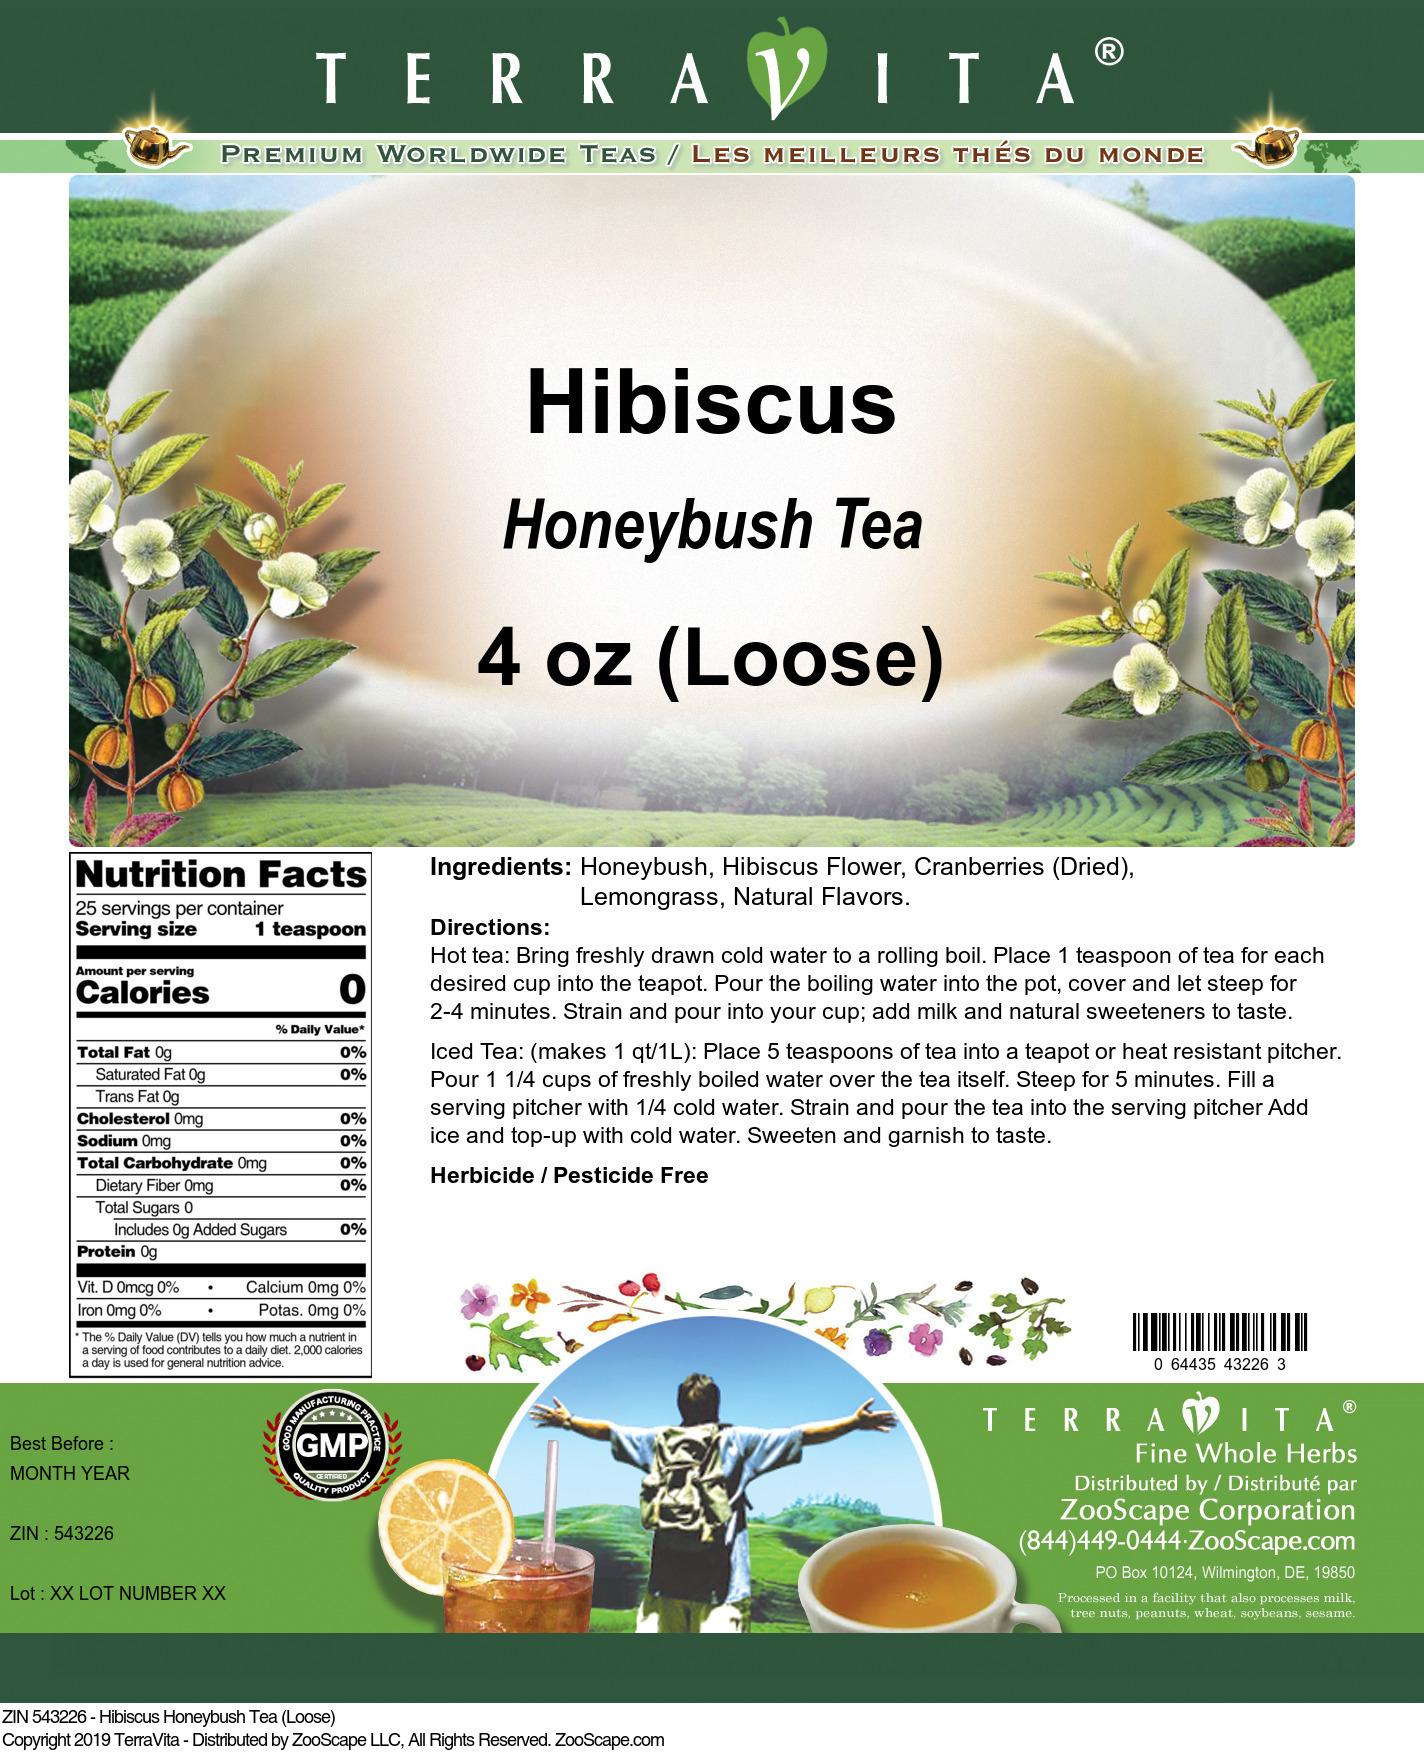 Hibiscus Honeybush Tea (Loose) - Label